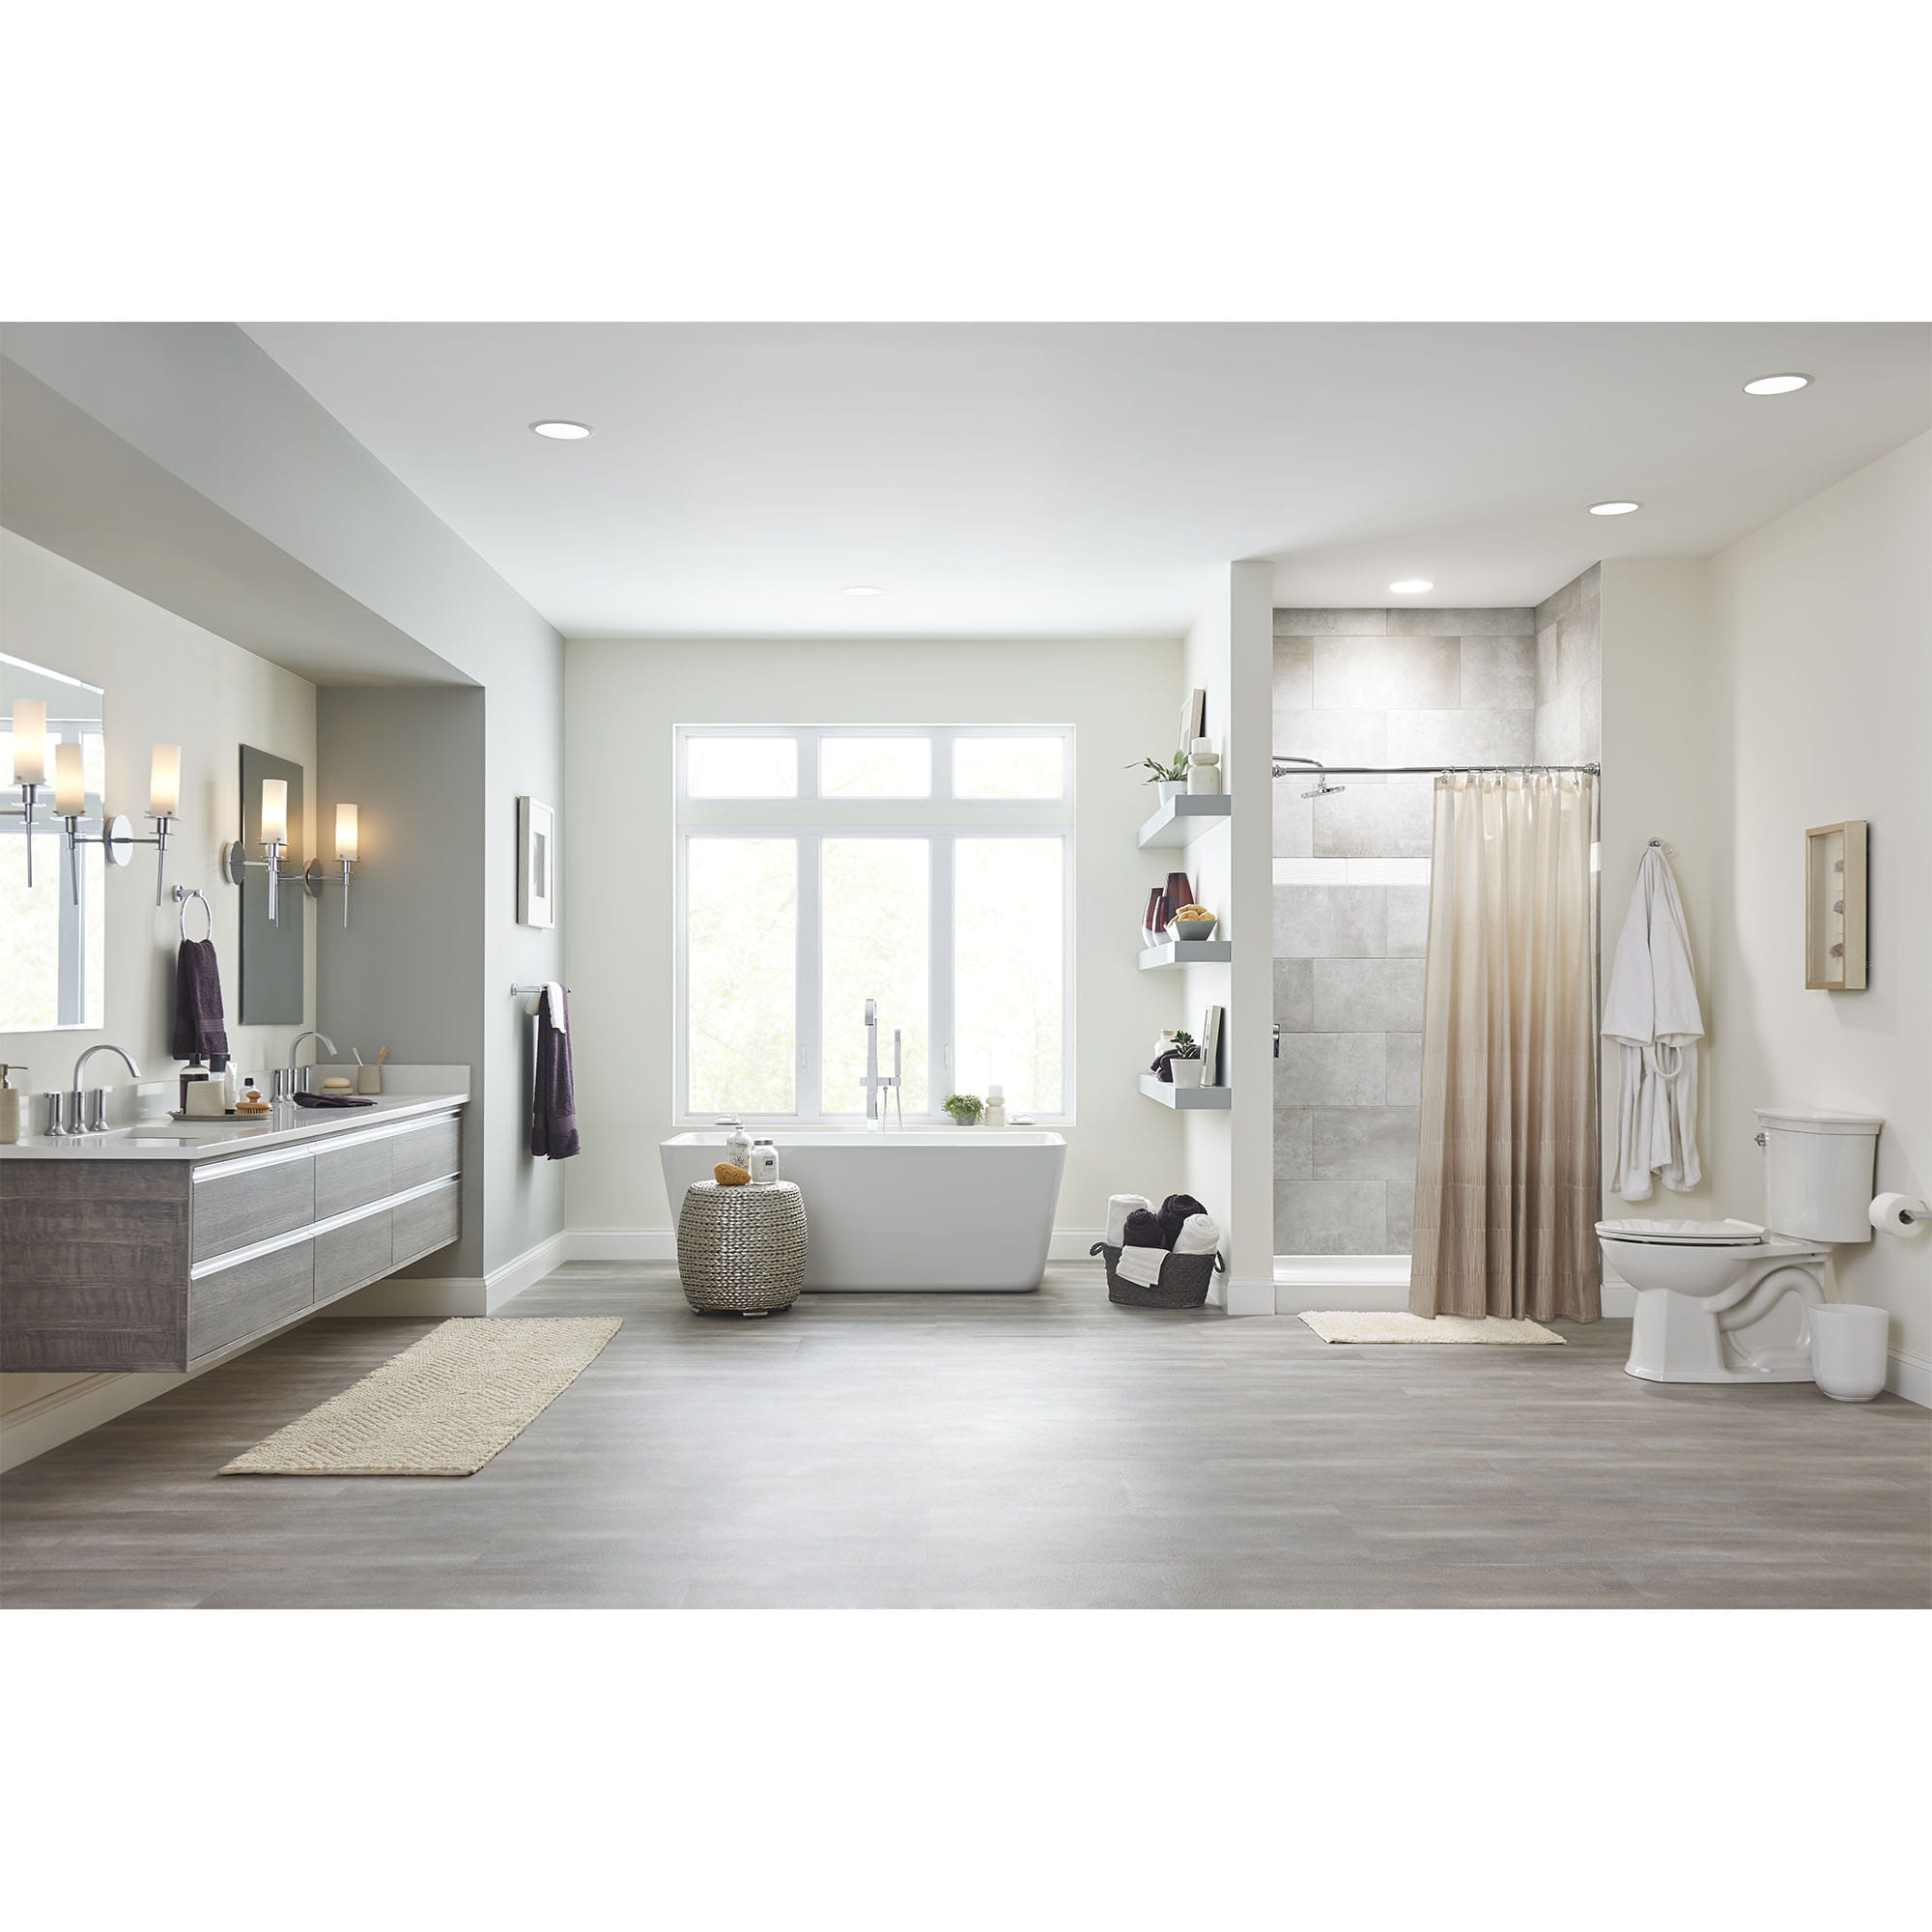 Sedona® Loft® 63 x 30-Inch Rectangle Freestanding Bathtub Center Drain With Integrated Overflow